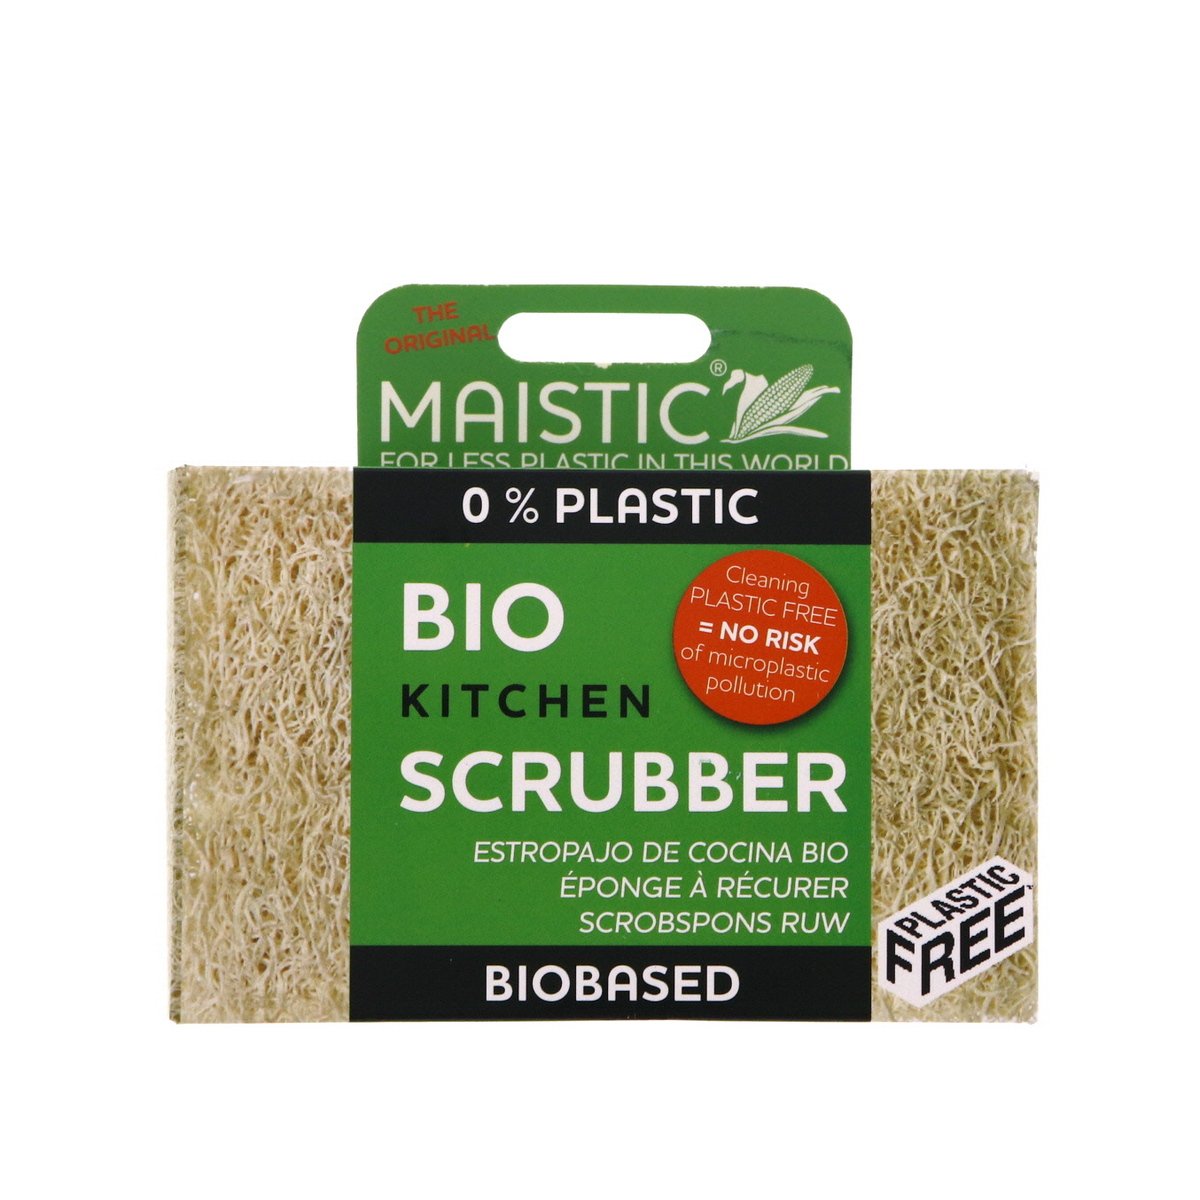 Maistic Bio Kitchen Scrubber 1pc